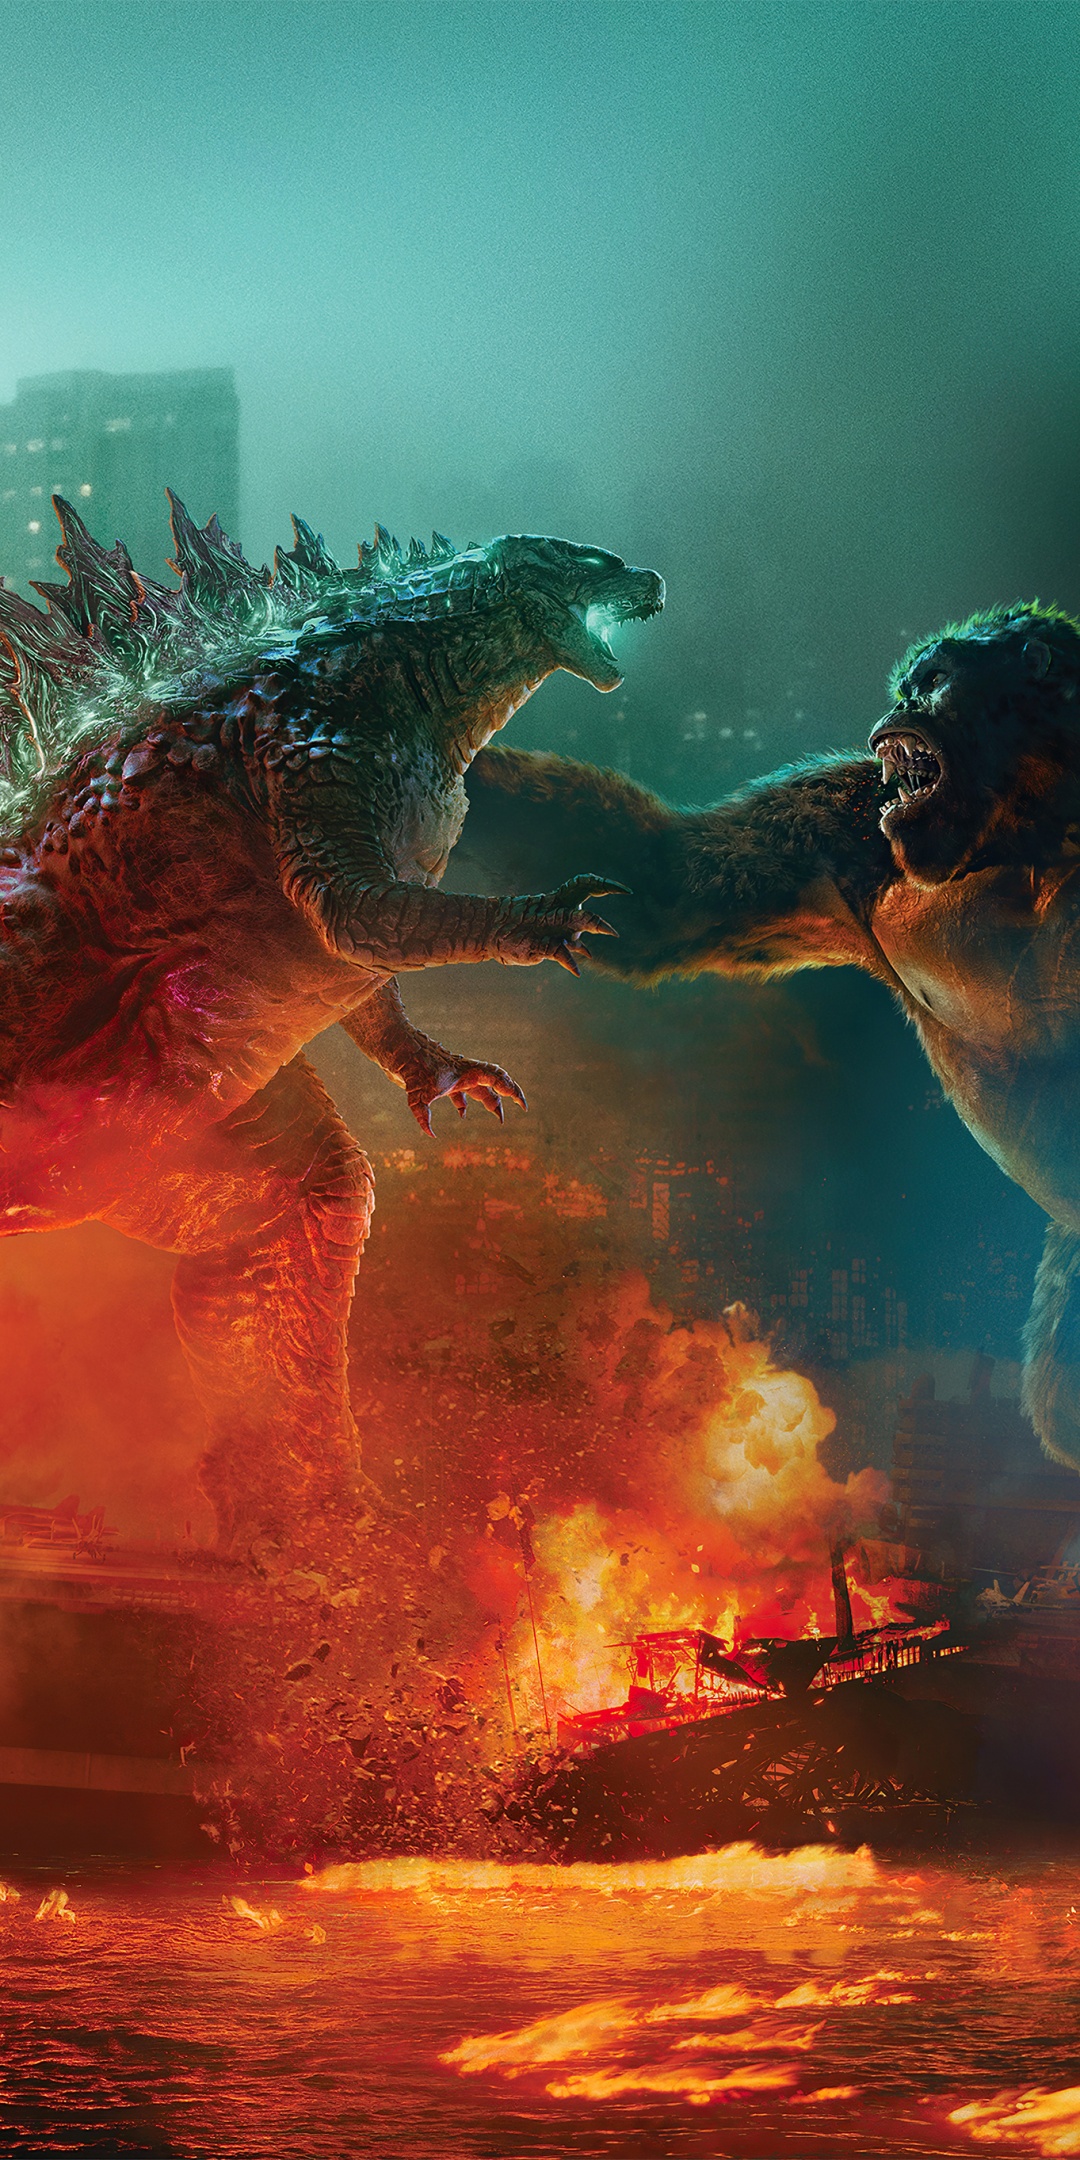 Godzilla vs Kong 4K Wallpaper, 2021 Movies, 5K, Movies, 4949